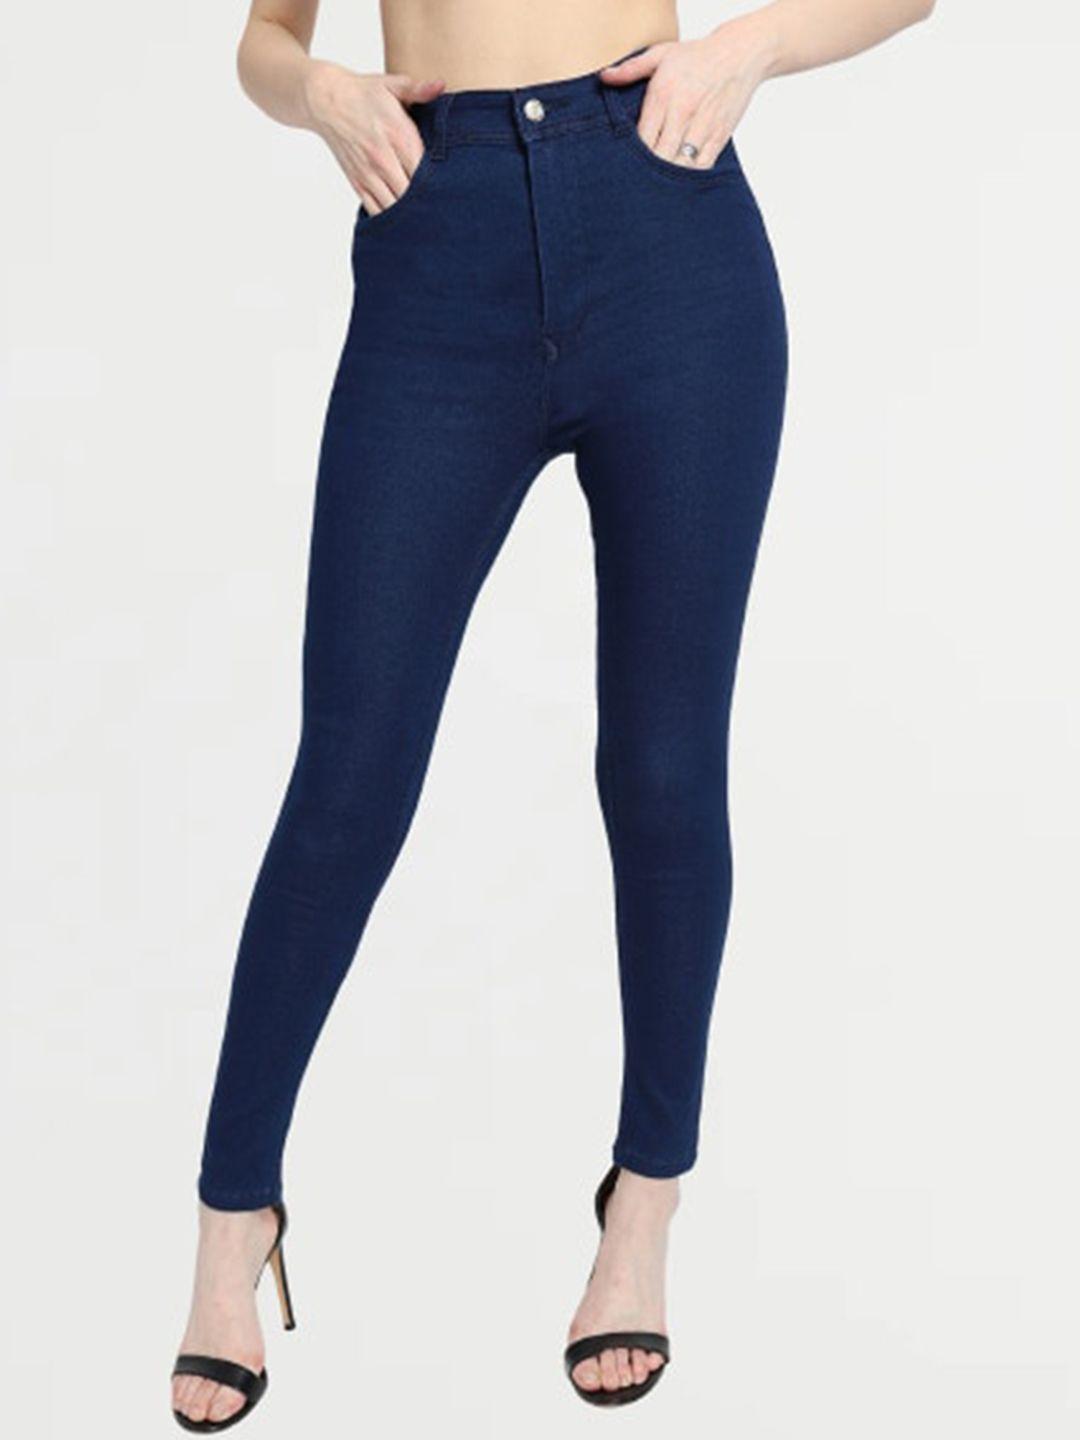 baesd women jean slim fit high-rise stretchable denim jeans